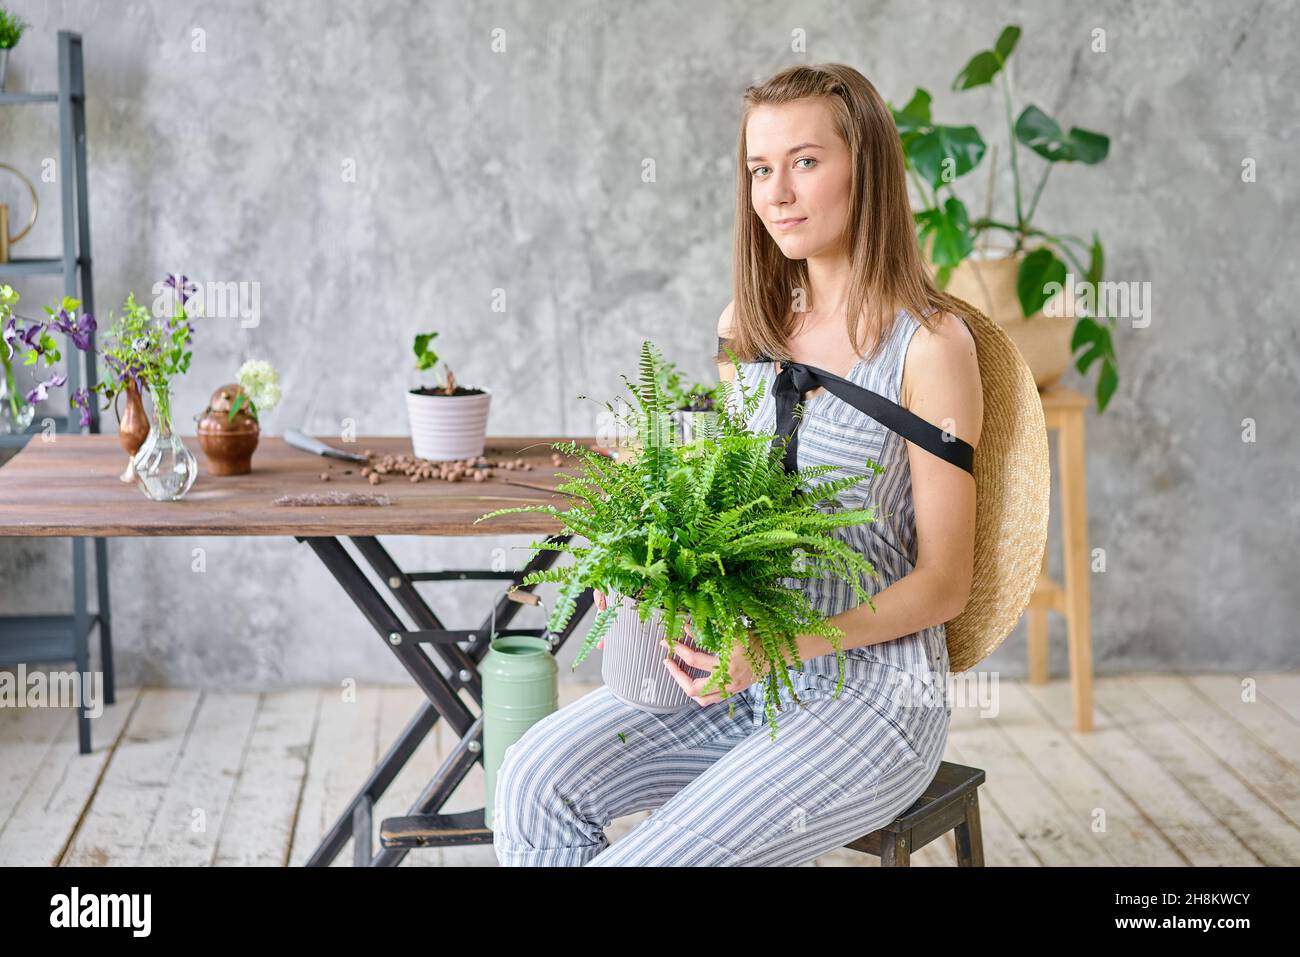 Closeup hands of Woman watering a fern, a houseplant. Concept of home garden. Flower and garden shop Stock Photo